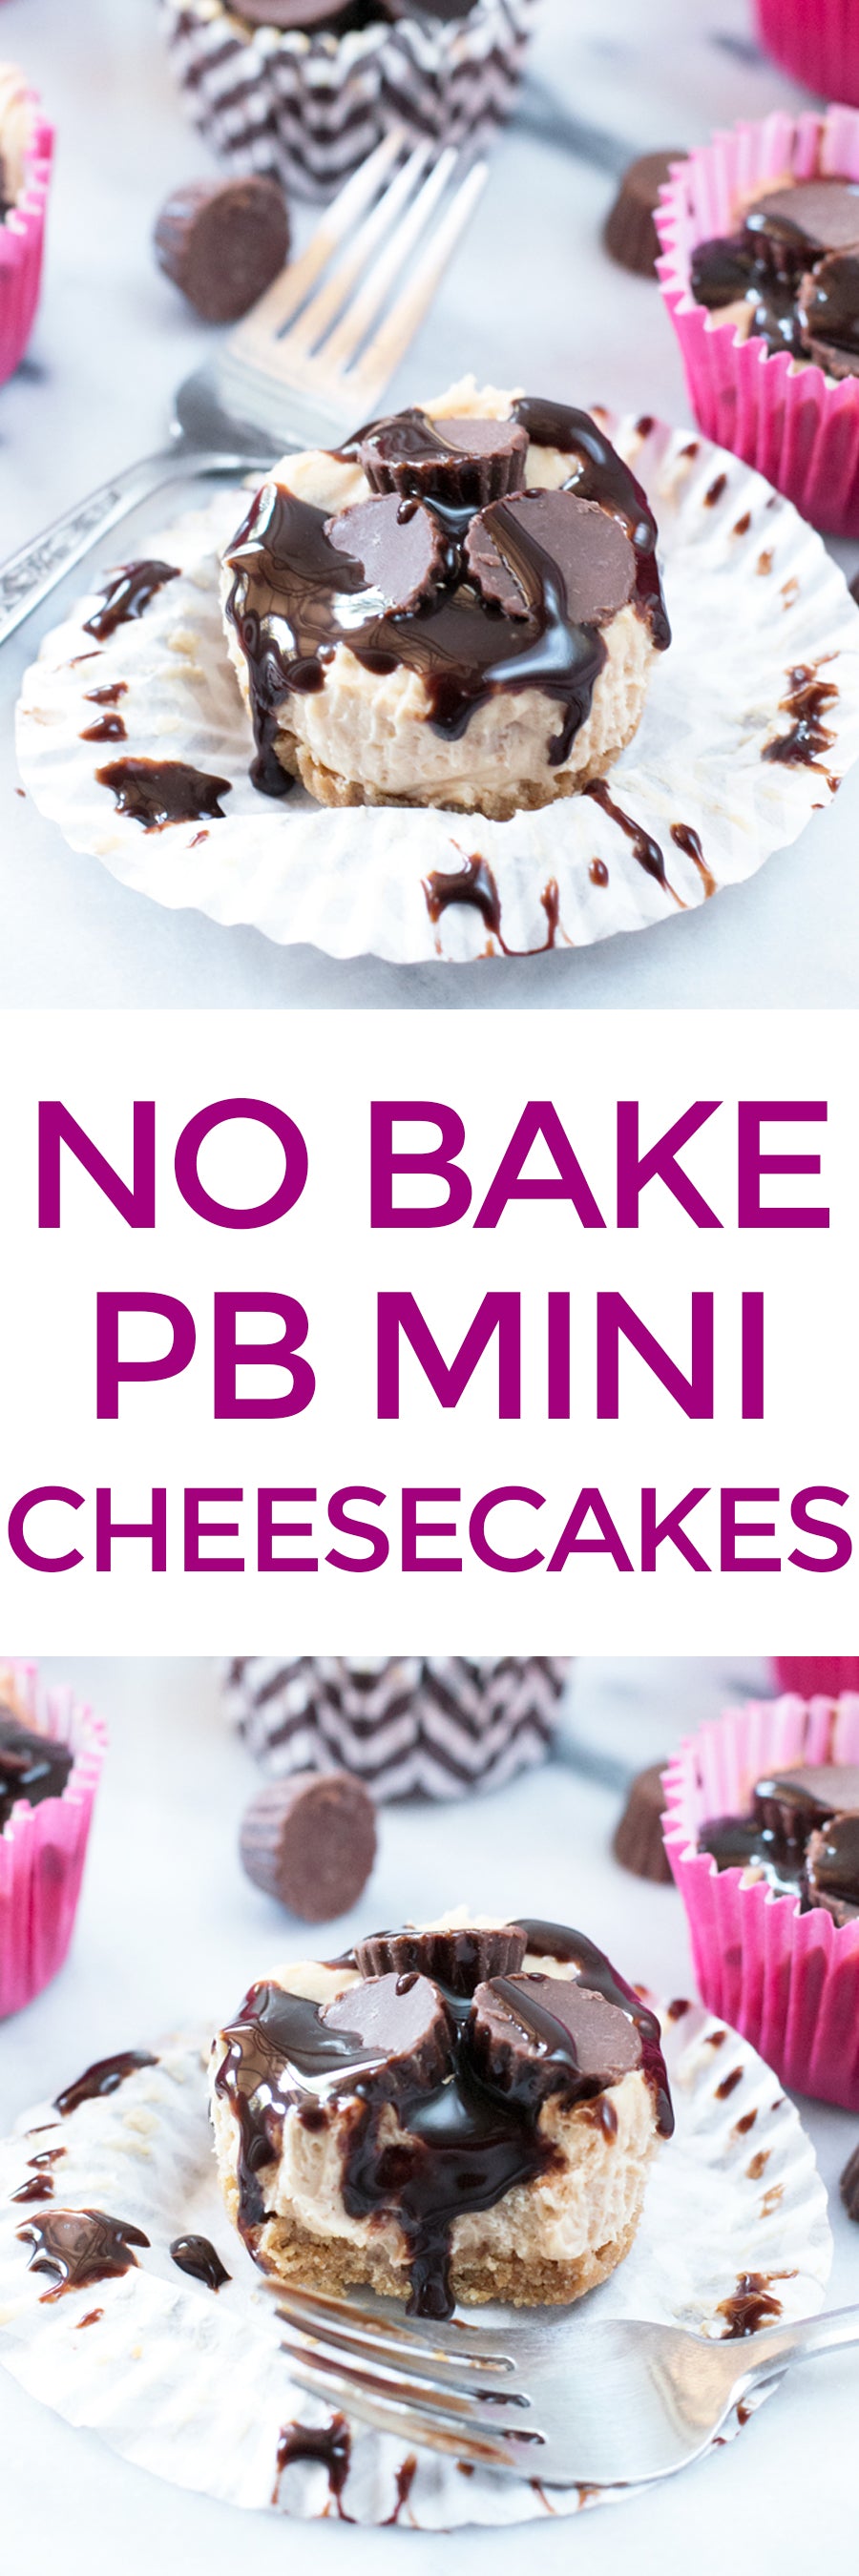 No Bake PB Mini Cheesecakes | pigofthemonth.com #dessert #peanutbutter #chocolate